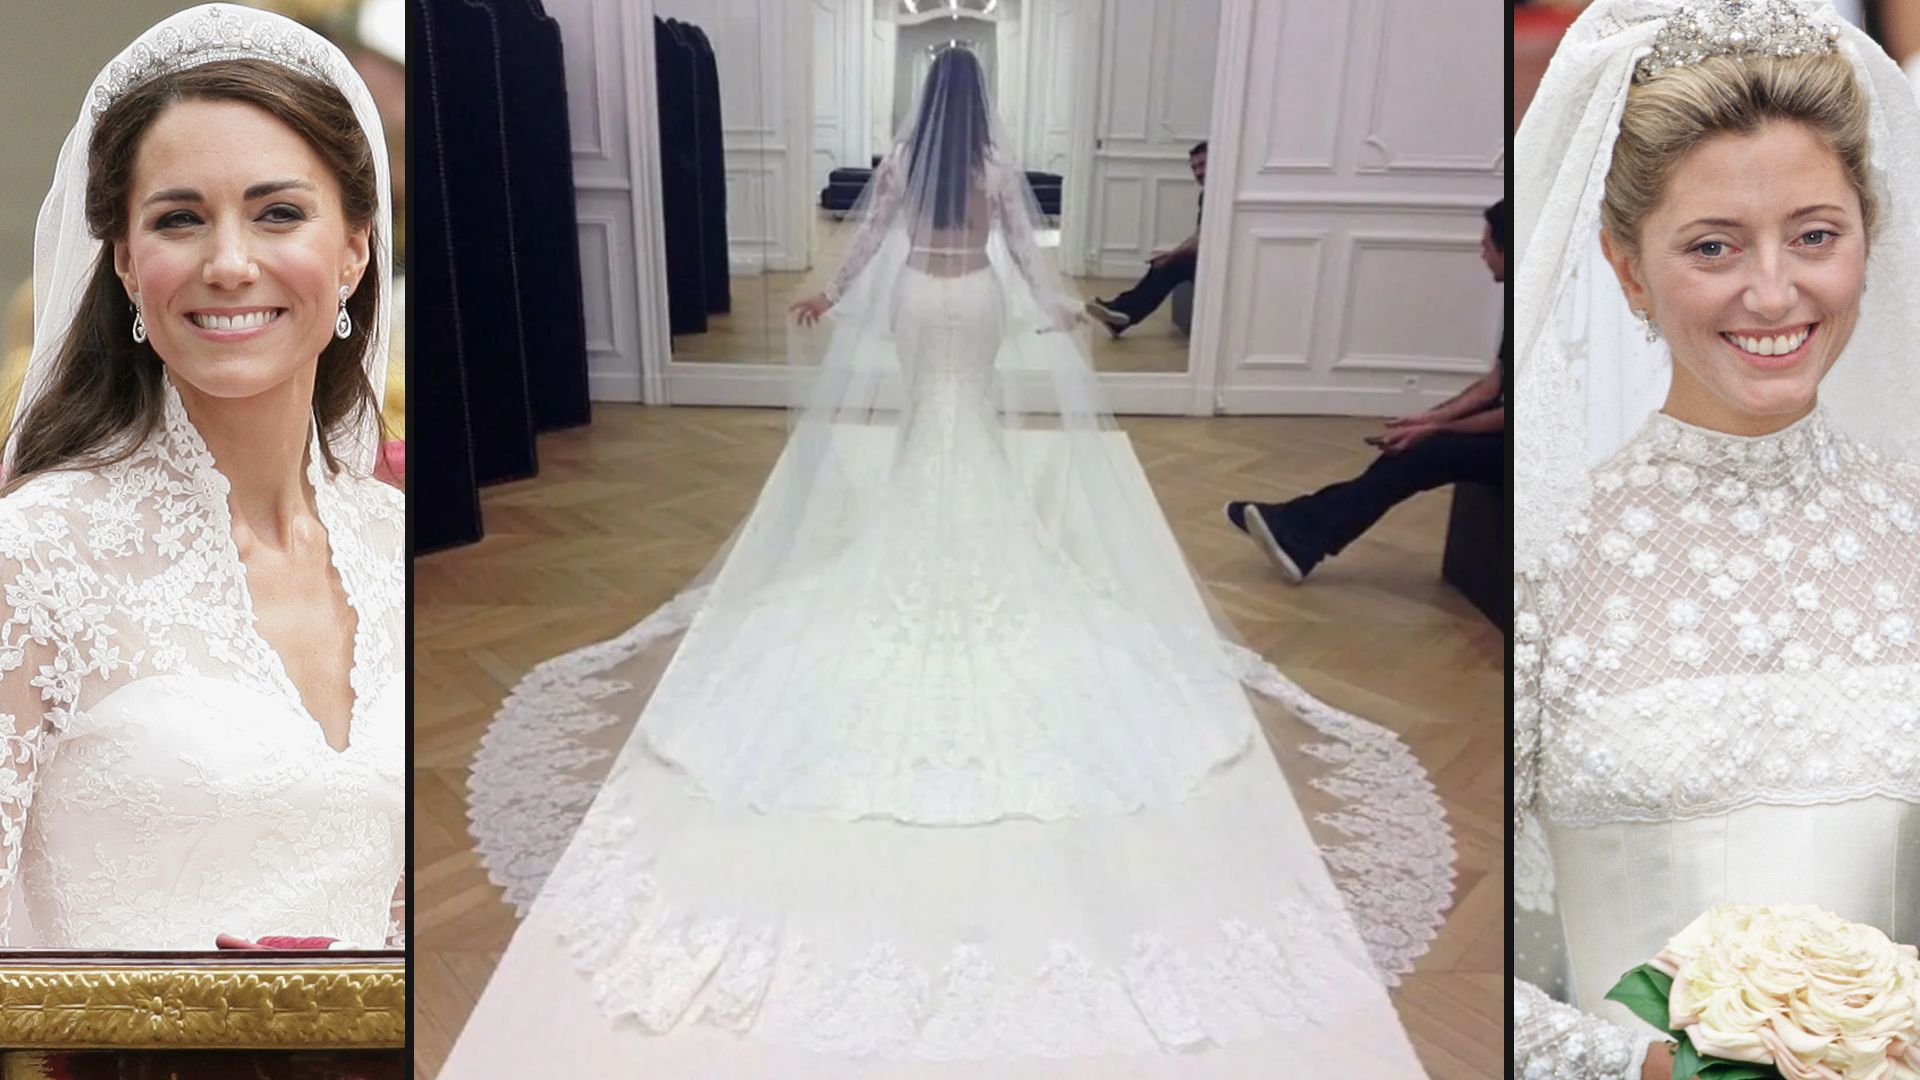 Expensive celeb wedding dresses including Princess Kate, Kim Kardashian and Princess Marie-Chantal